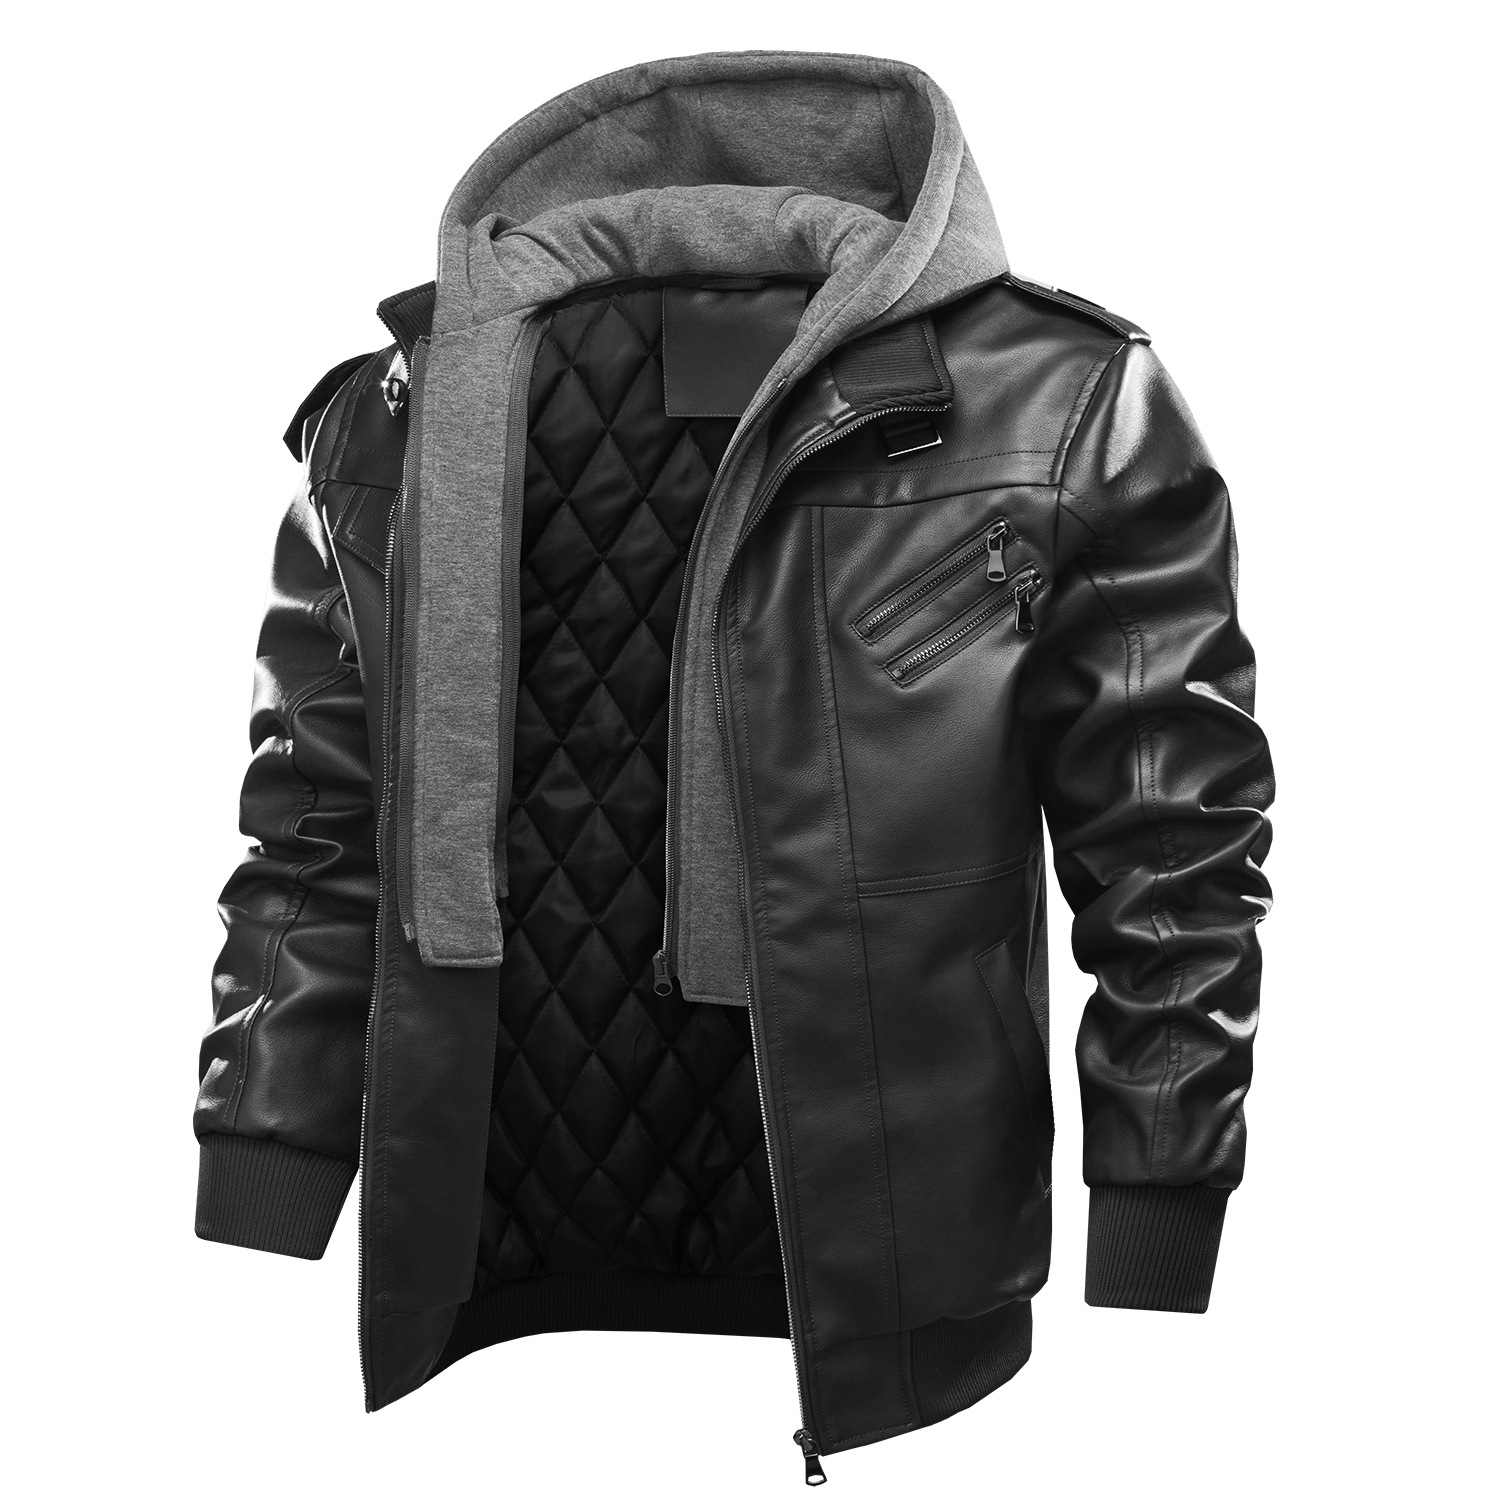 US$ 69.99 - Motorcycle PU Leather Jacket Cotton Warm Men's Jacket ...